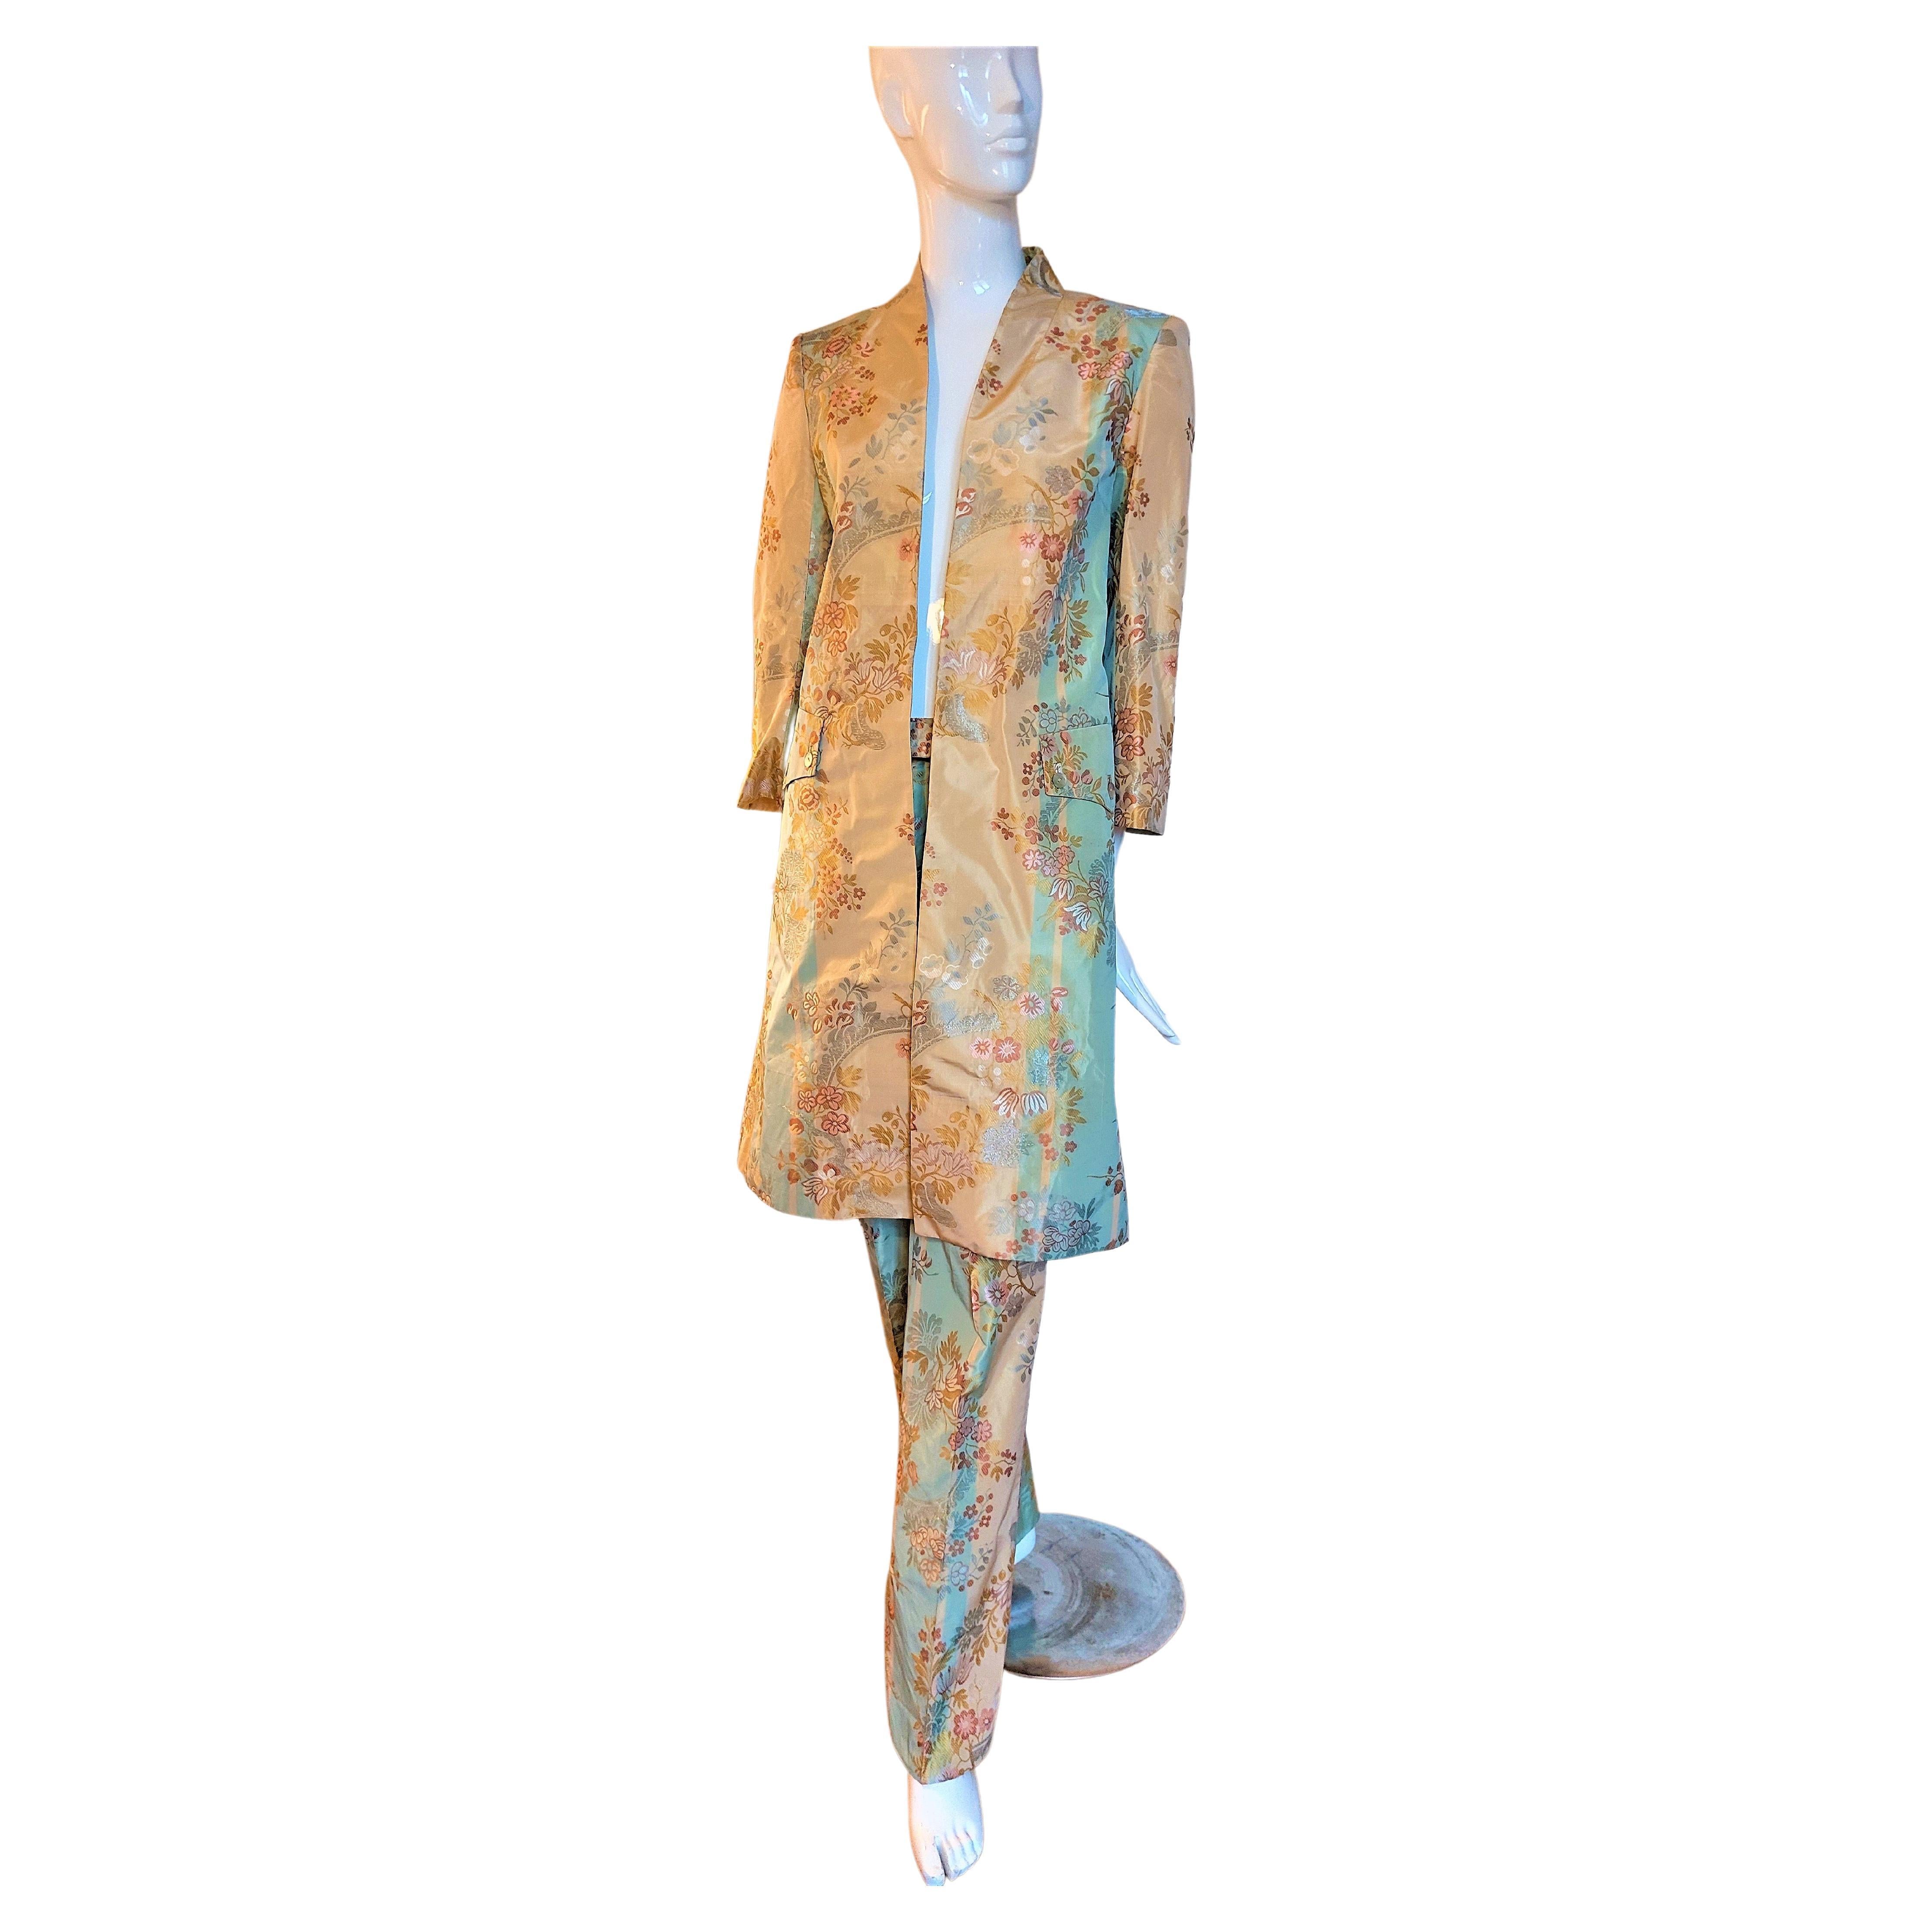 Alexander Mcqueen - Costume pantalon de pirate en brocart de soie « Shipwreck », années 2000 en vente